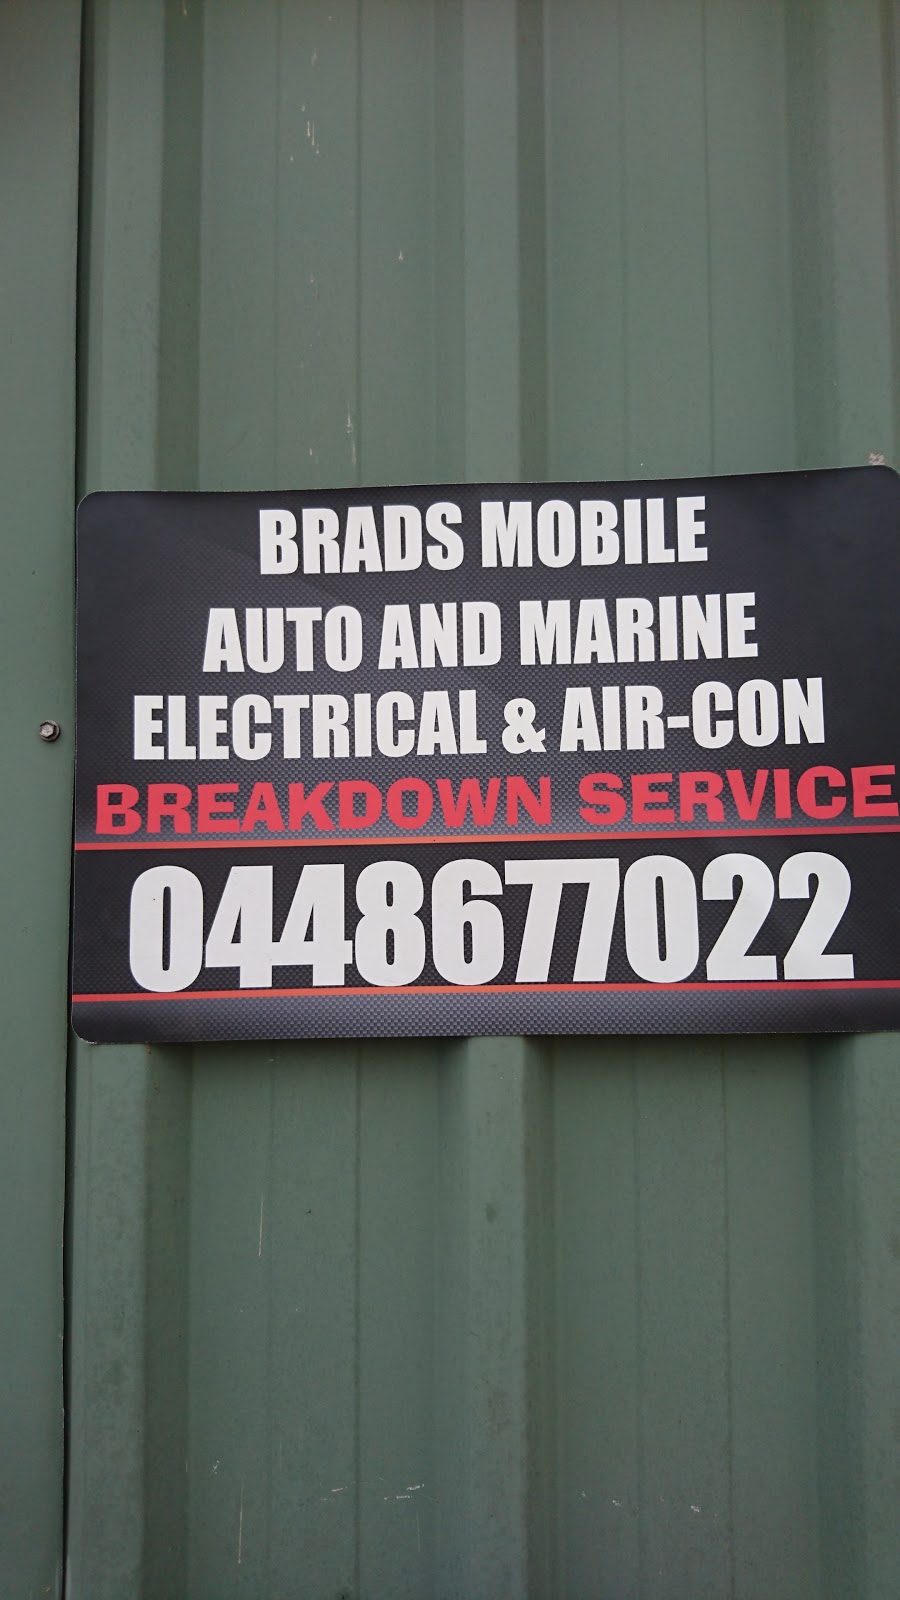 Brads Mobile Auto & Marine Electrical | 665 Toogoom Rd, Beelbi Creek QLD 4659, Australia | Phone: 0448 677 022